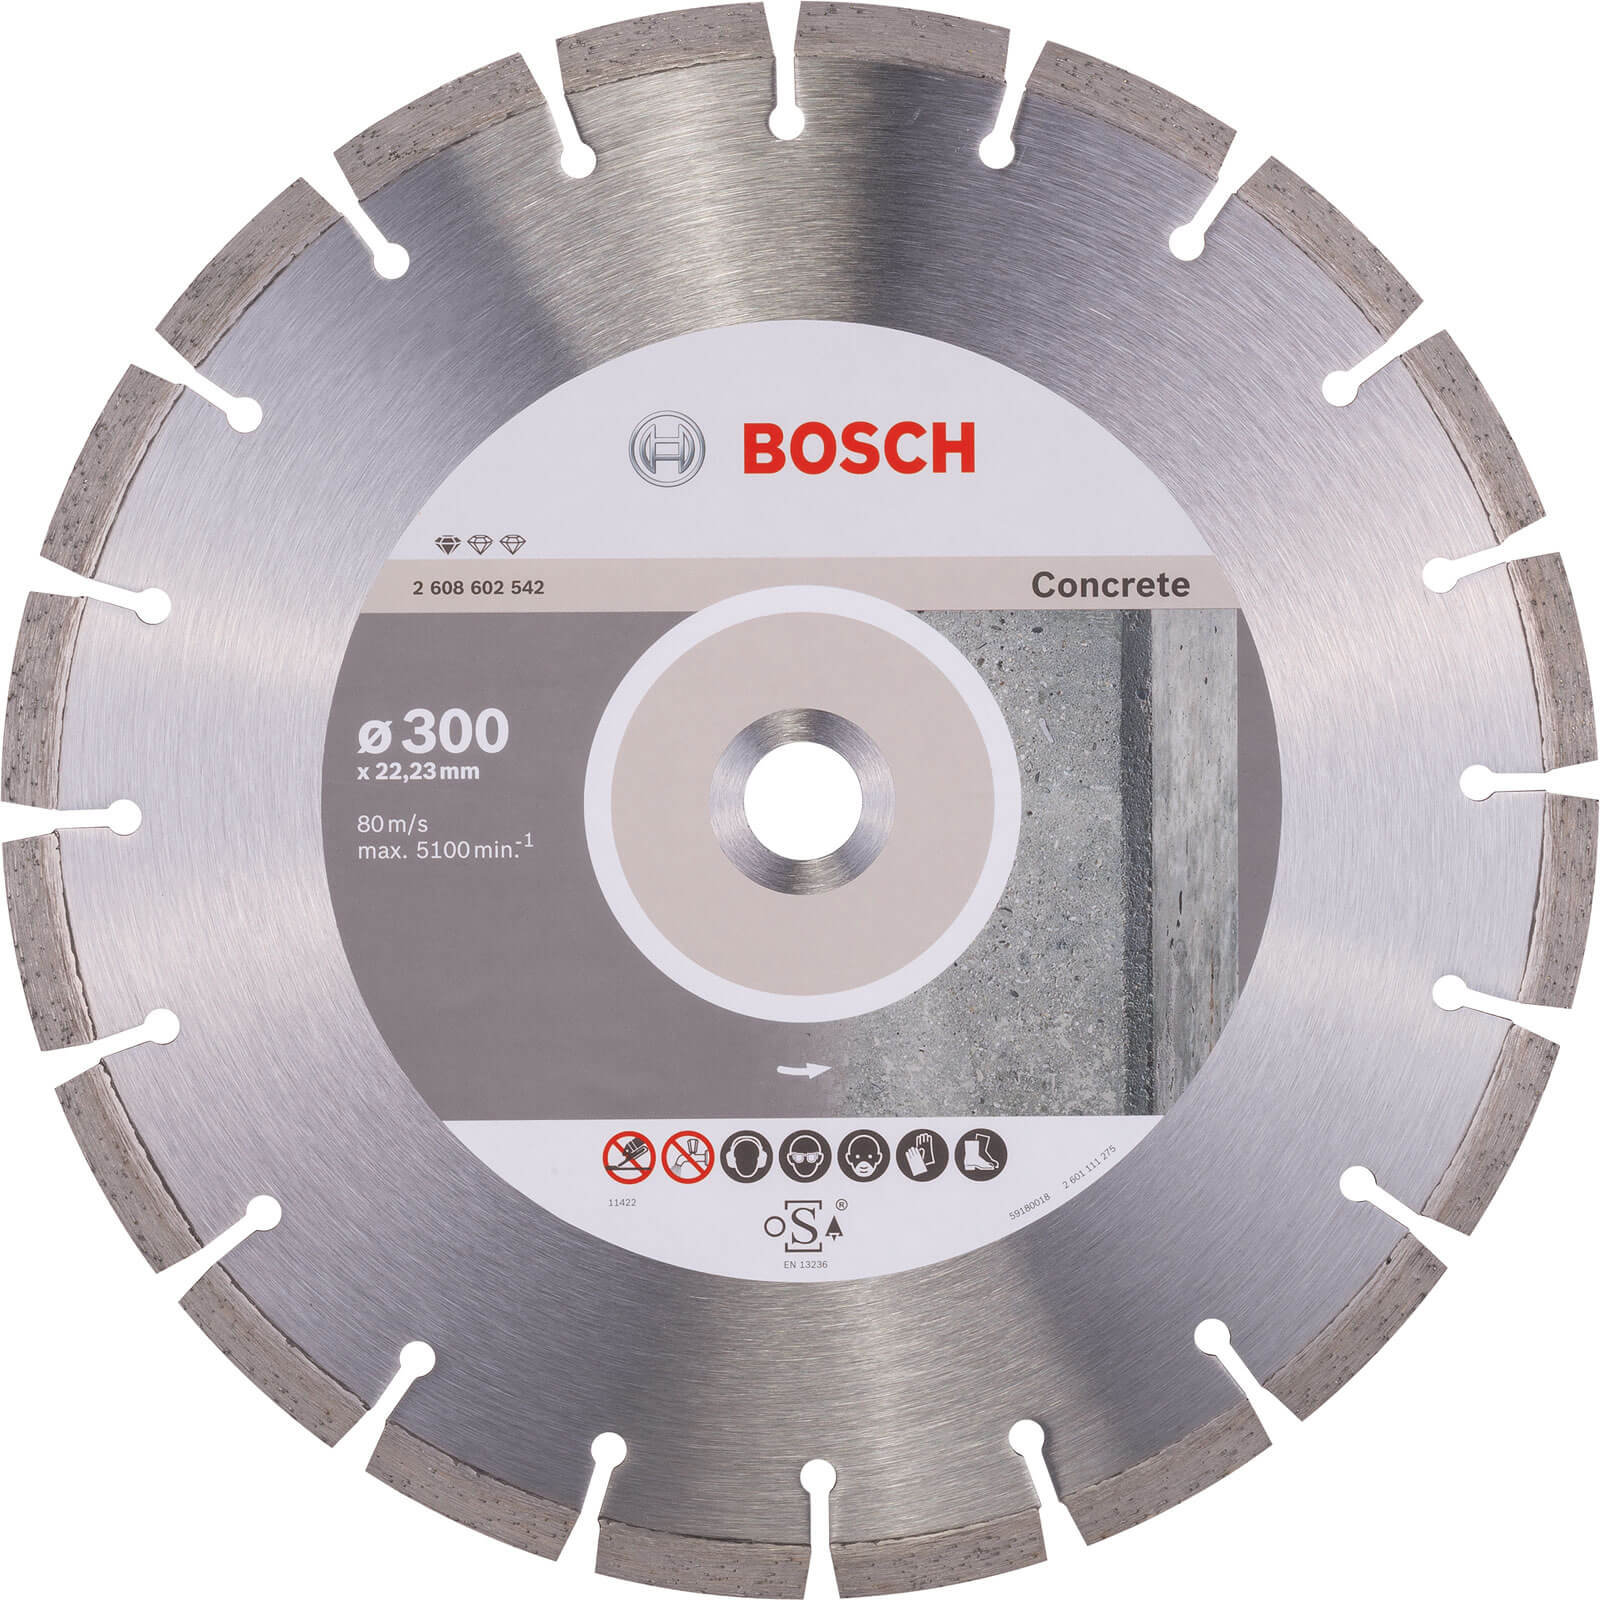 Image of Bosch Standard Concrete Diamond Cutting Disc 300mm